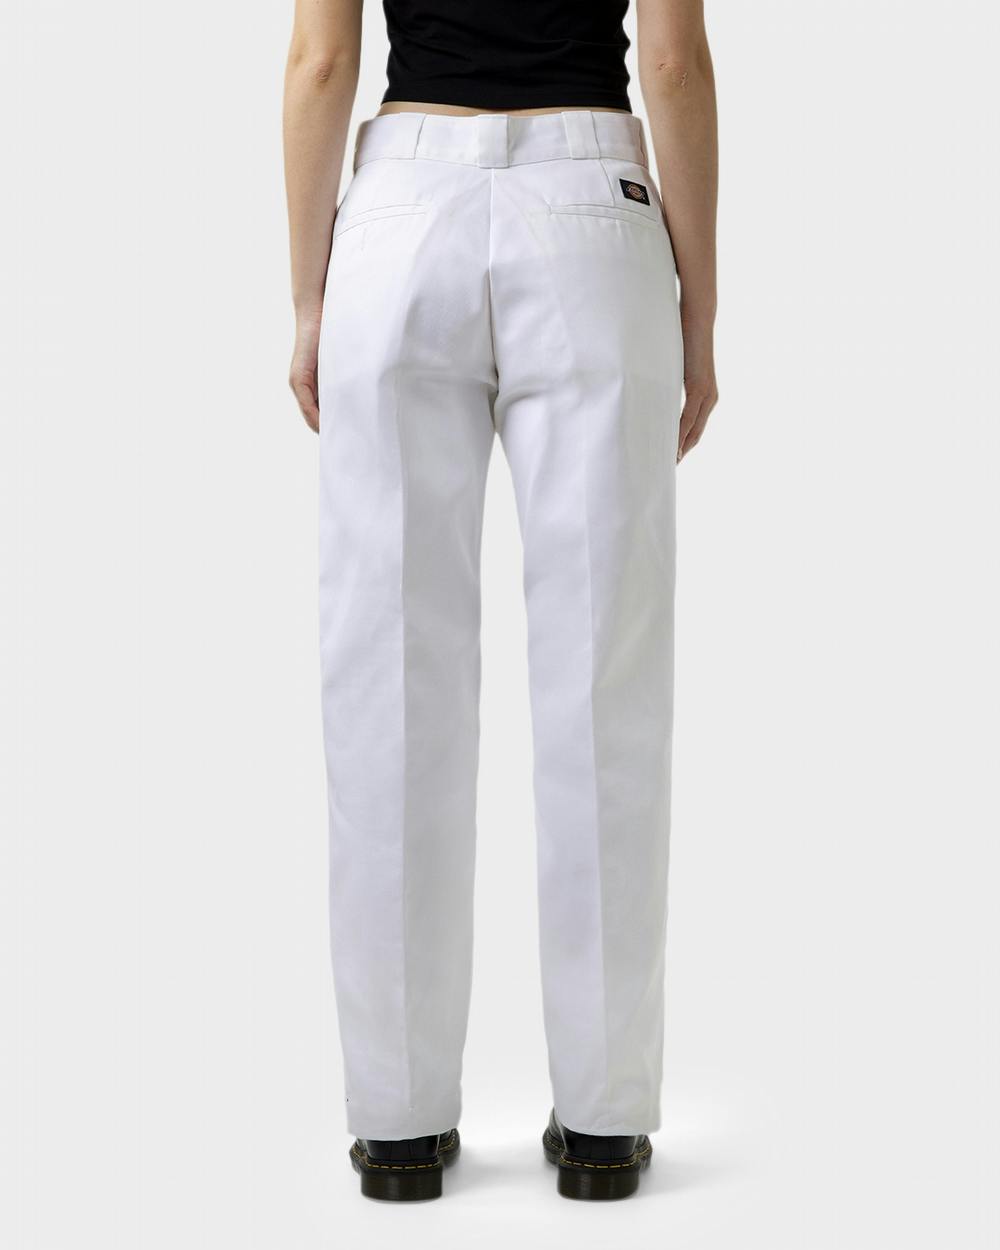 Dickies Australia & NZ auf Instagram: „@jacquiealexander wears 874 Original  pant in White - tap to shop or link …